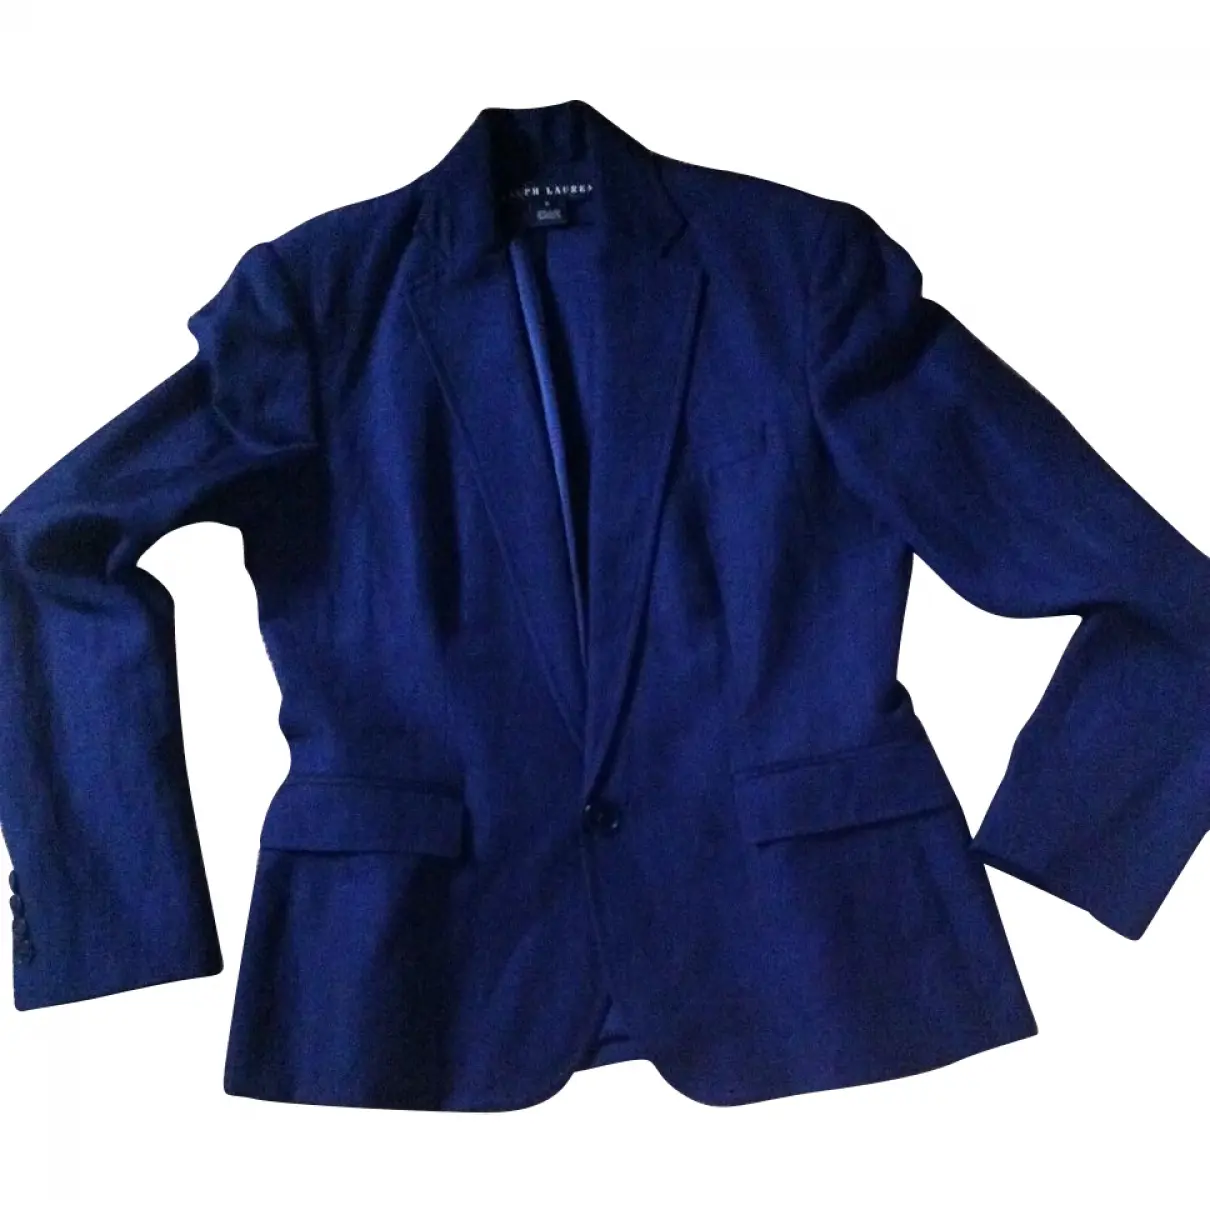 Blue Jacket Polo Ralph Lauren